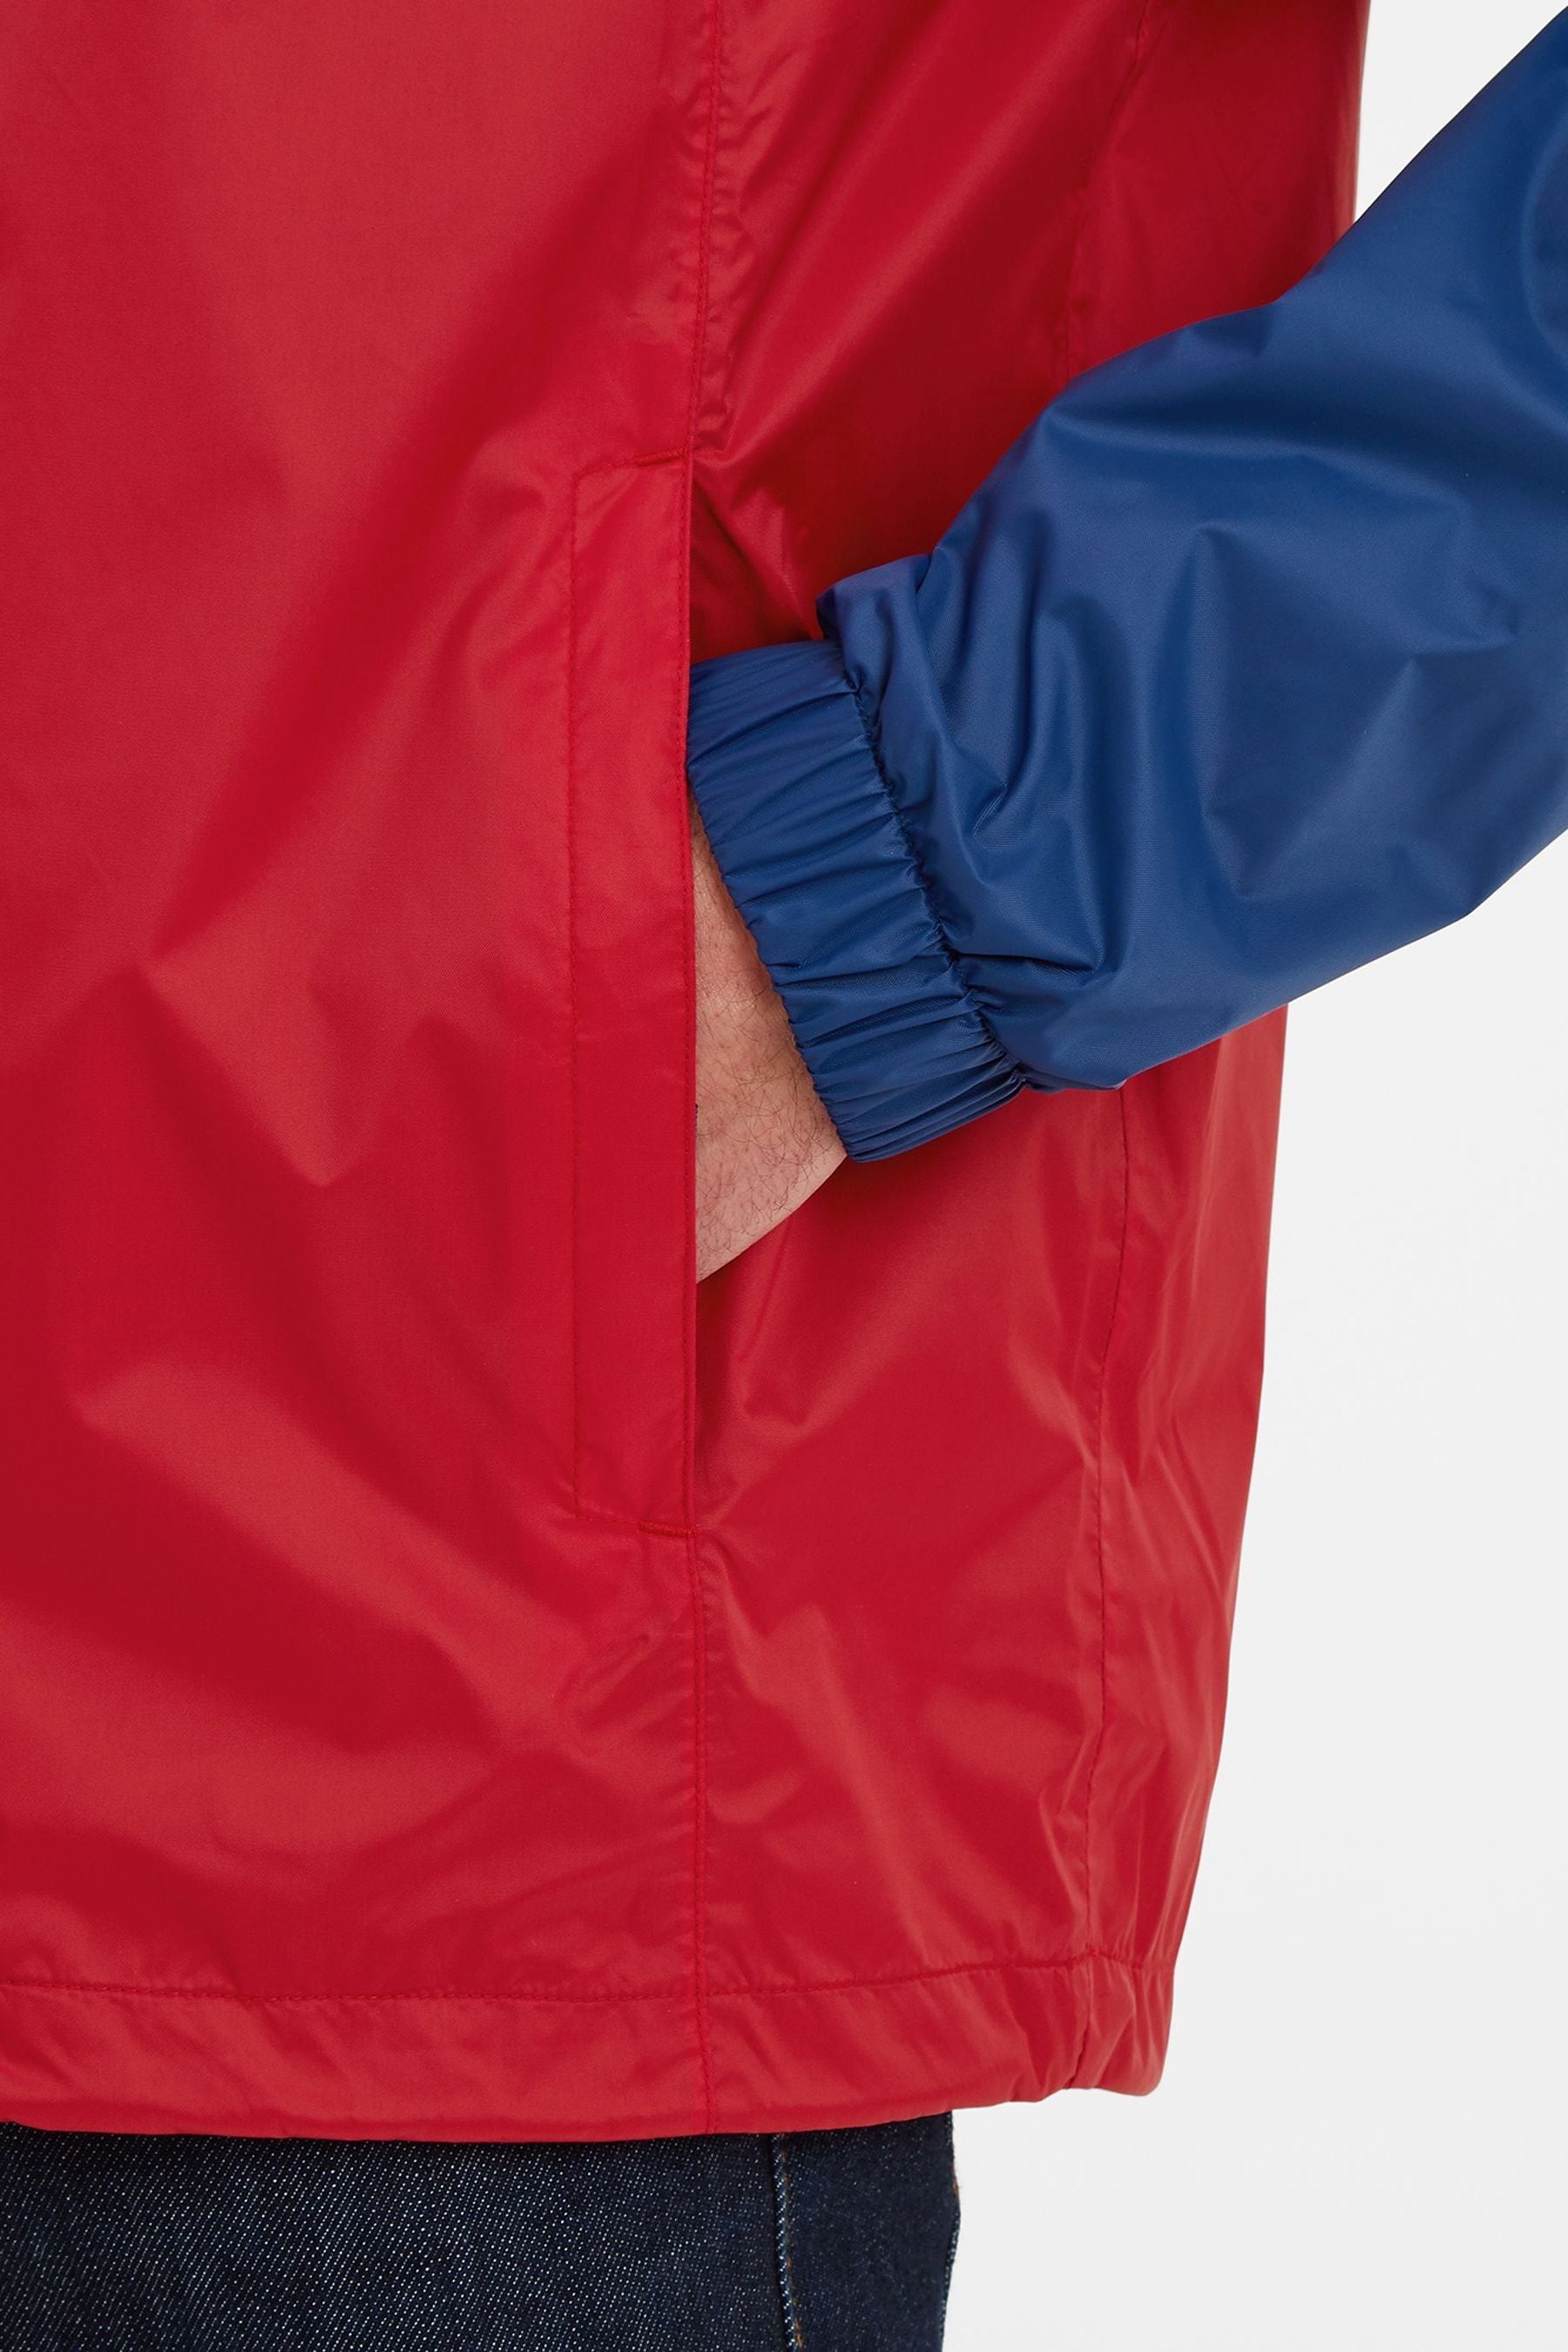 Buy TOG24 Blue Colour Block Craven Mens Waterproof Packaway Jacket from ...